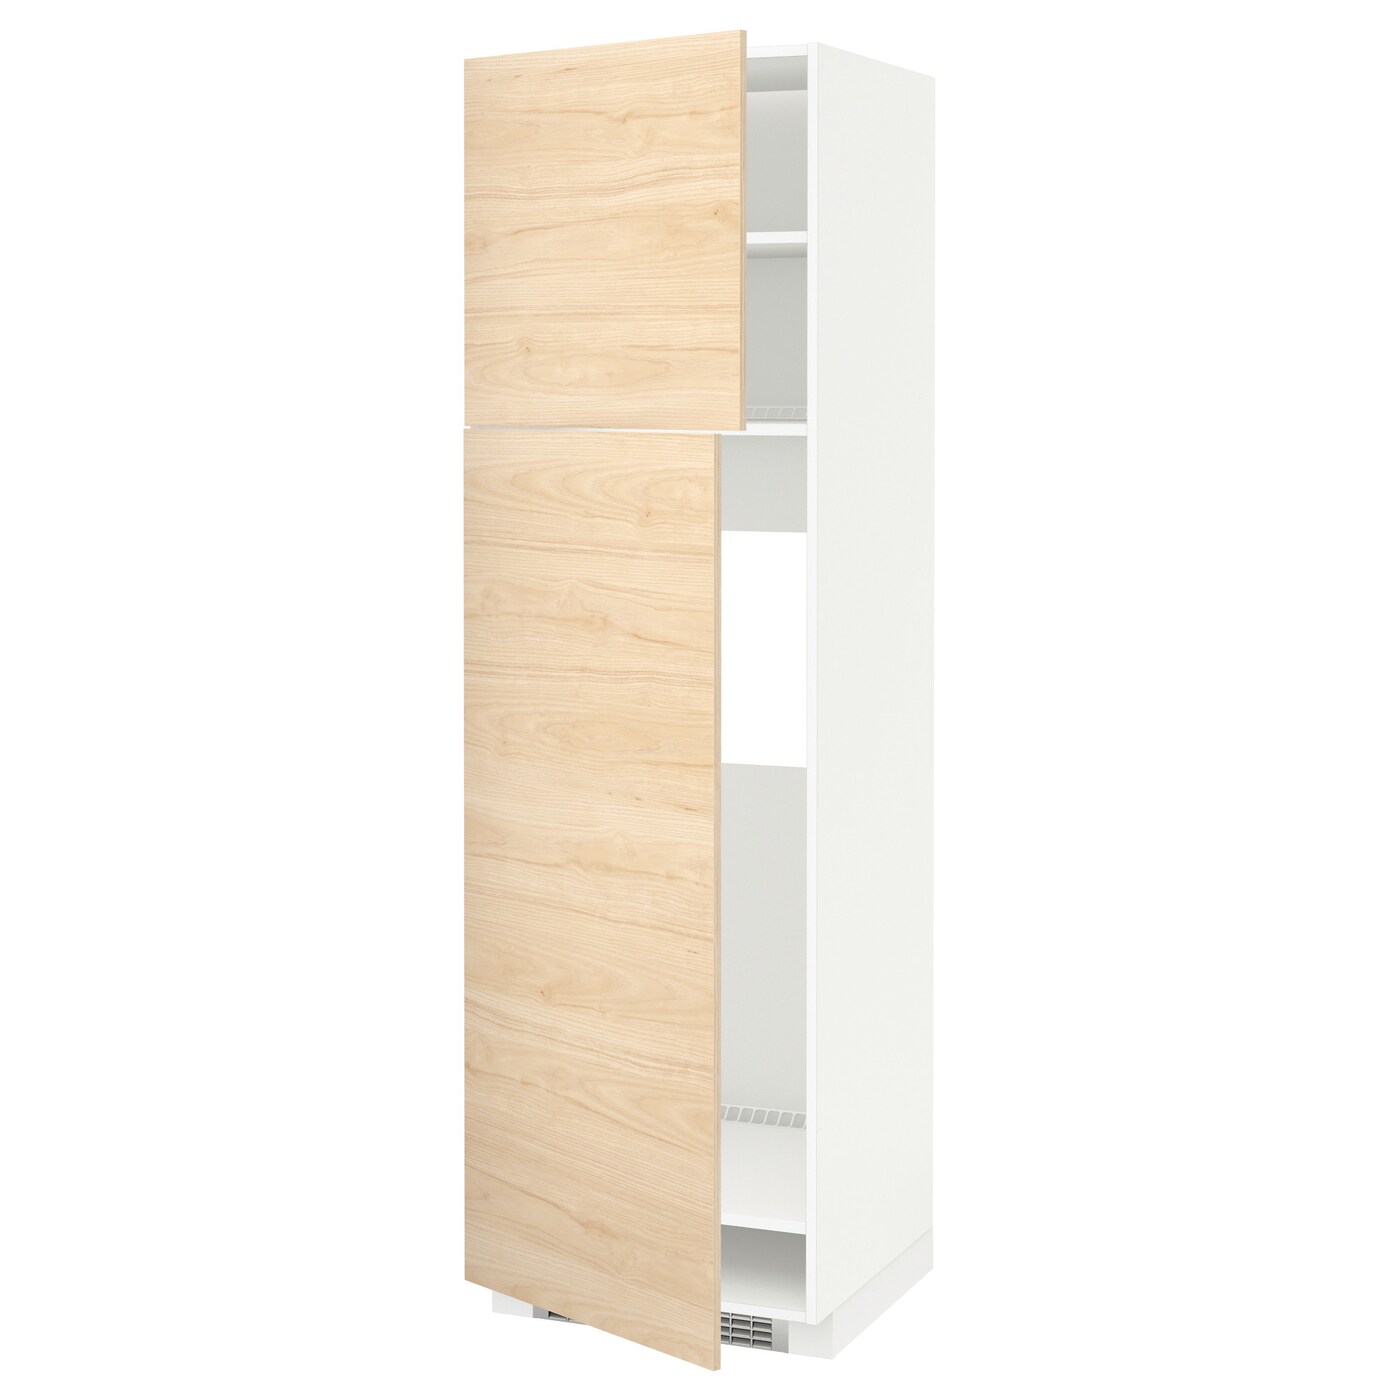 Высокий кухонный шкаф - IKEA METOD/МЕТОД ИКЕА, 200х60х60 см, белый/под беленый дуб